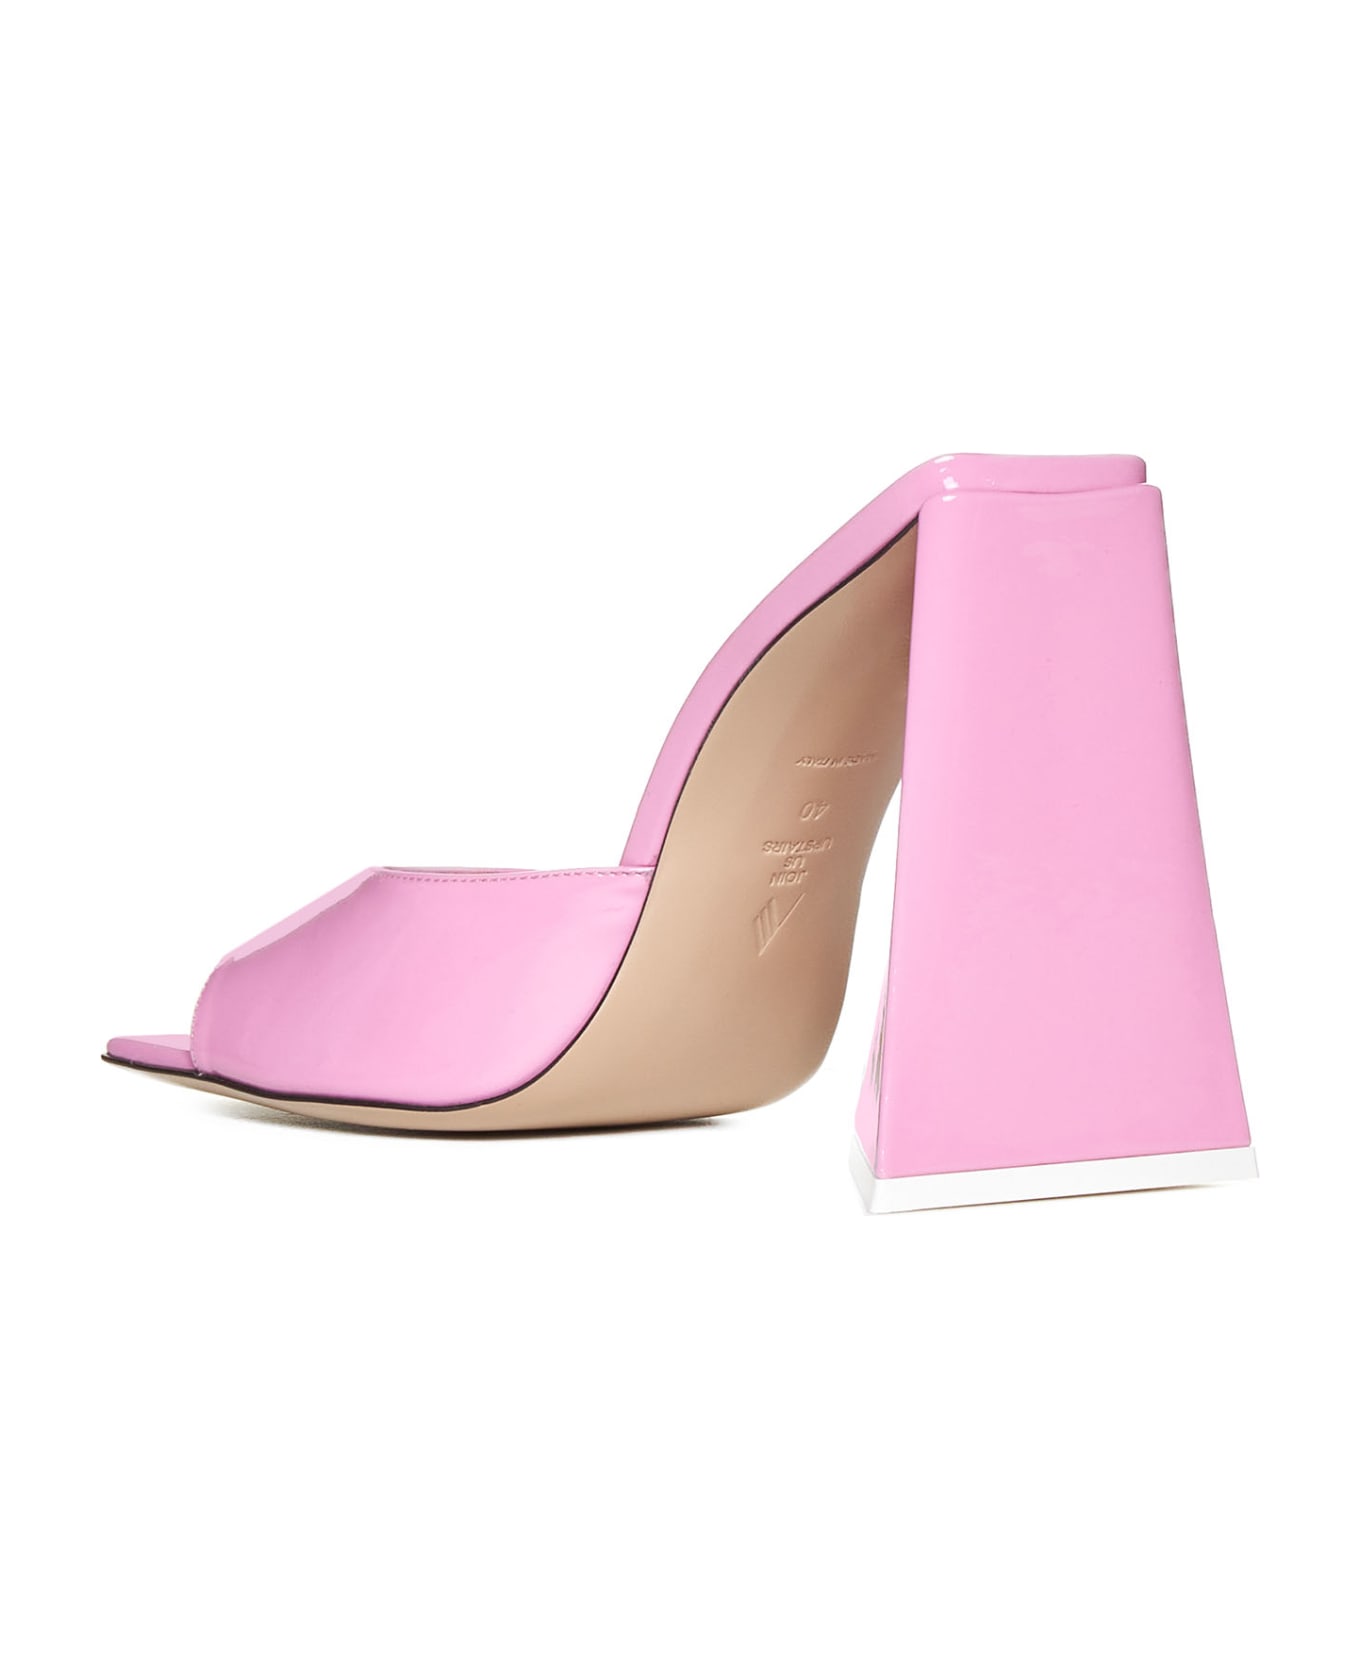 The Attico Sandals - Light pink